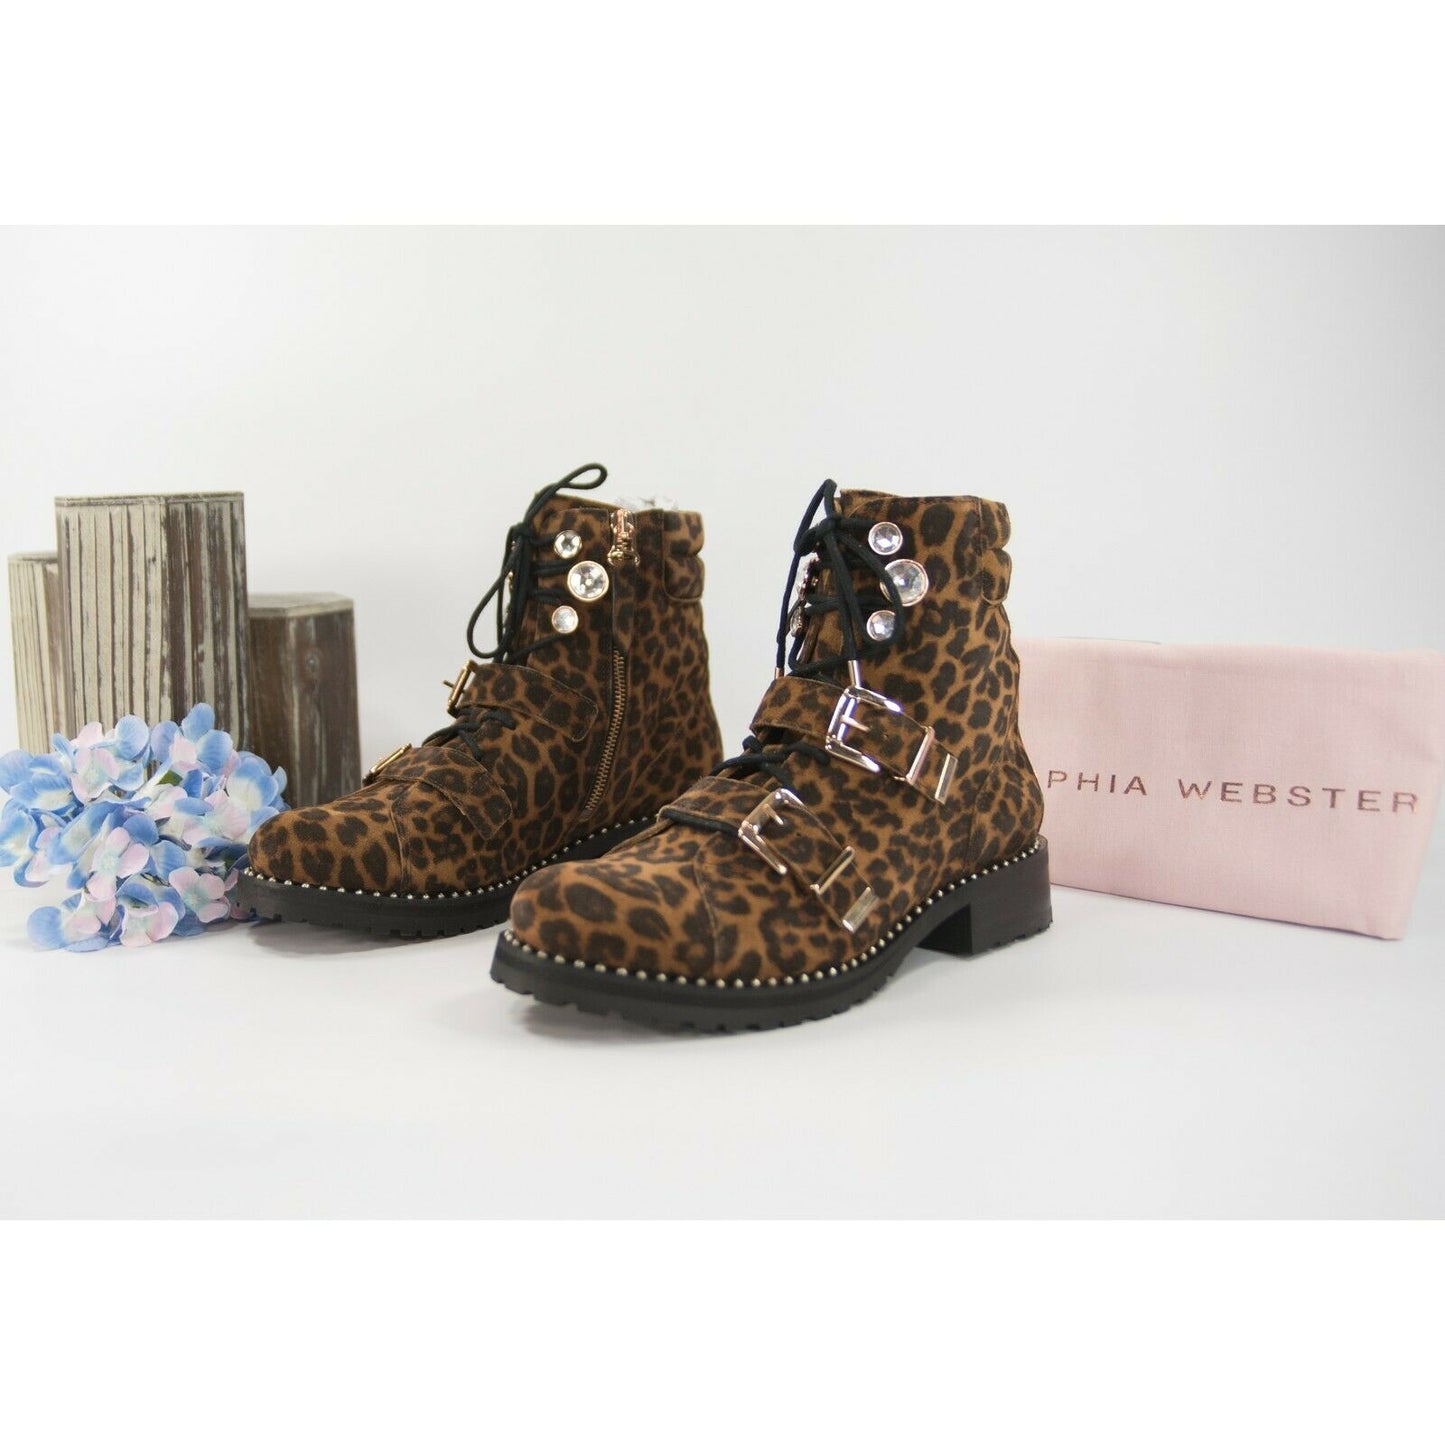 Sophia Webster Ziggy Leopard Suede Crystal Lug Sole Hiking Boots Size 37 NIB